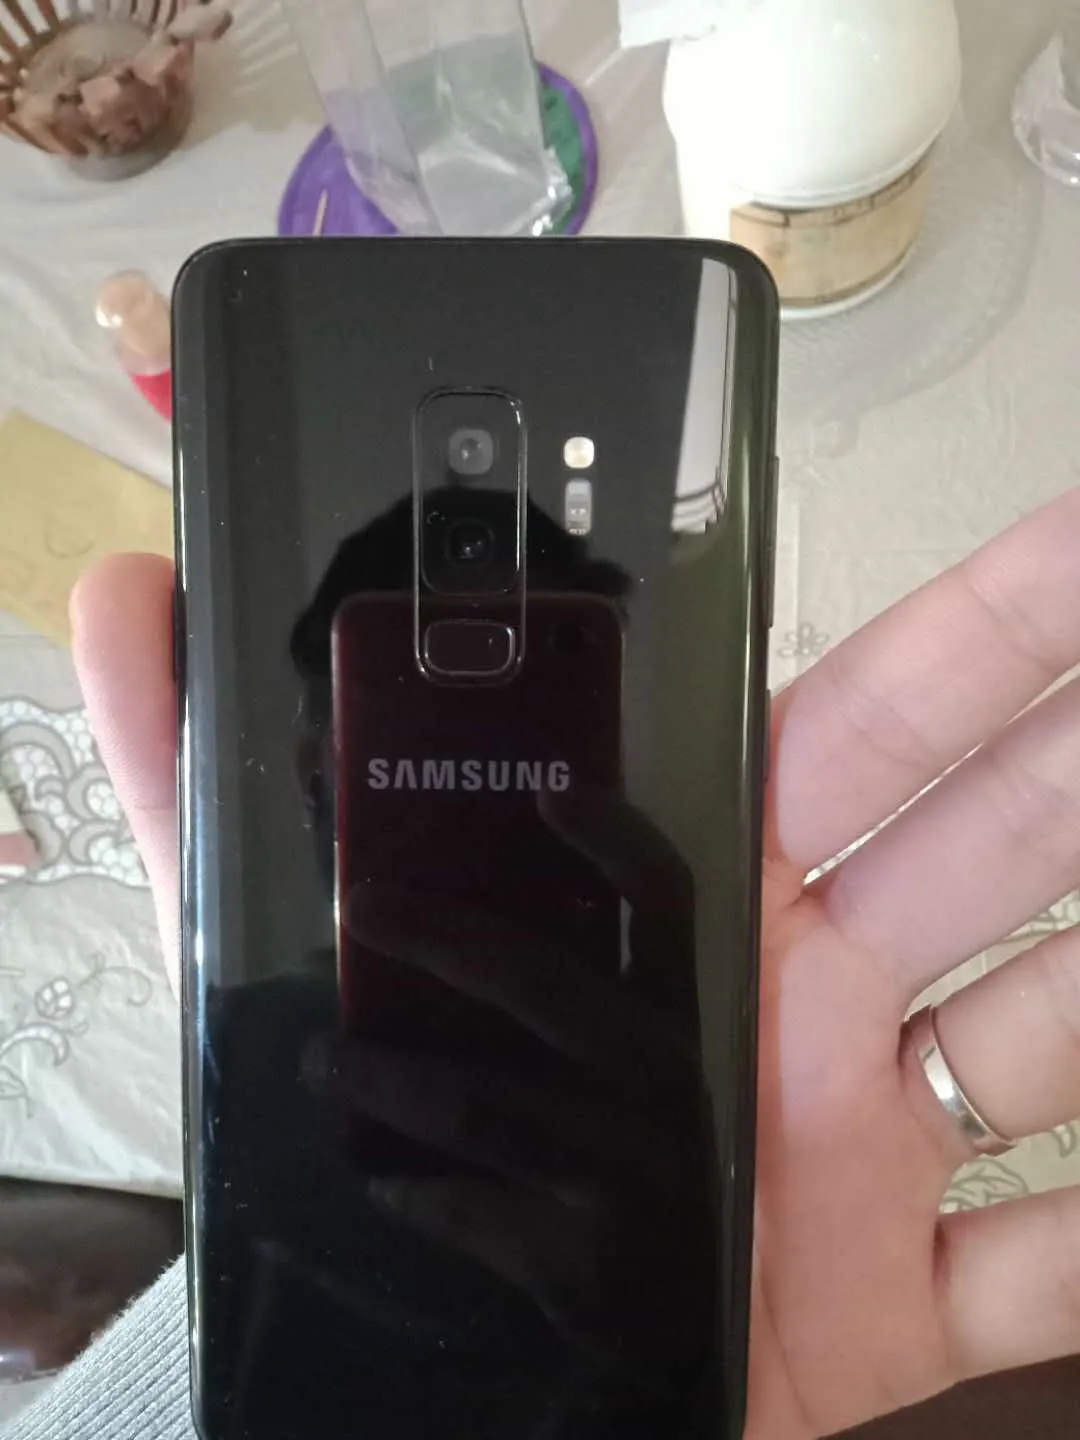 Samsung S9+ Model SM-G9650/DS - photo 2